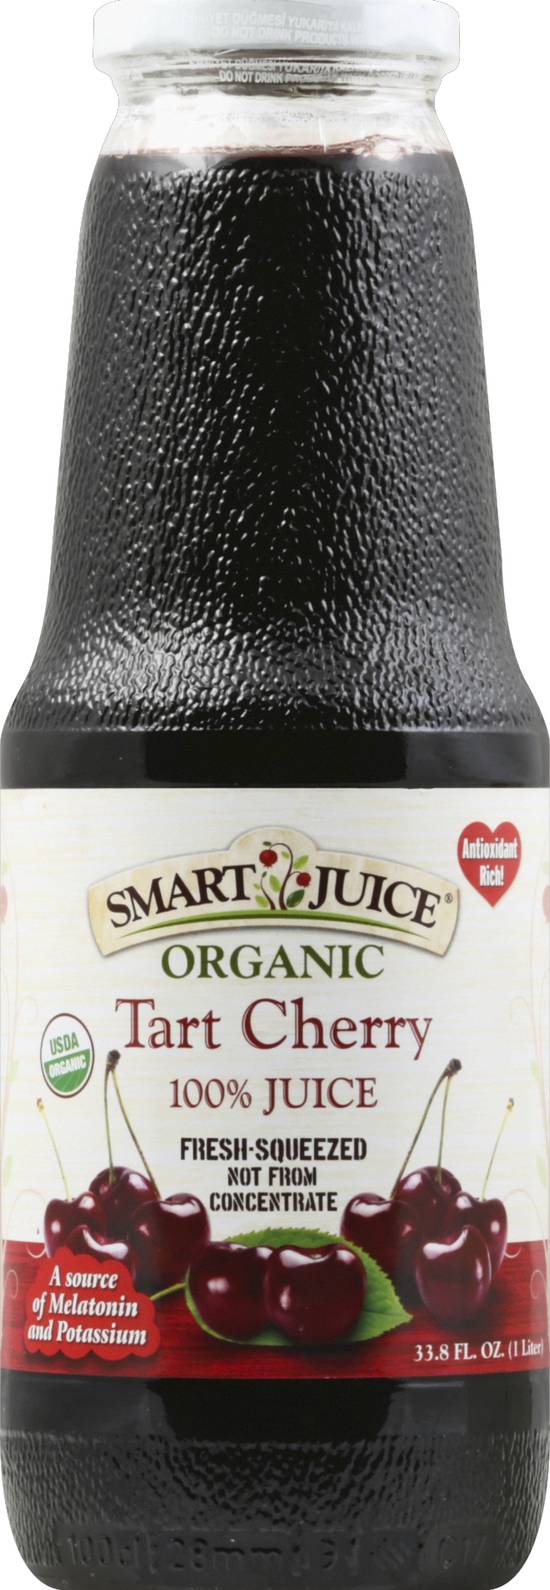 Smart Juice Organic Tart Cherry 100% Juice (33.8 fl oz)